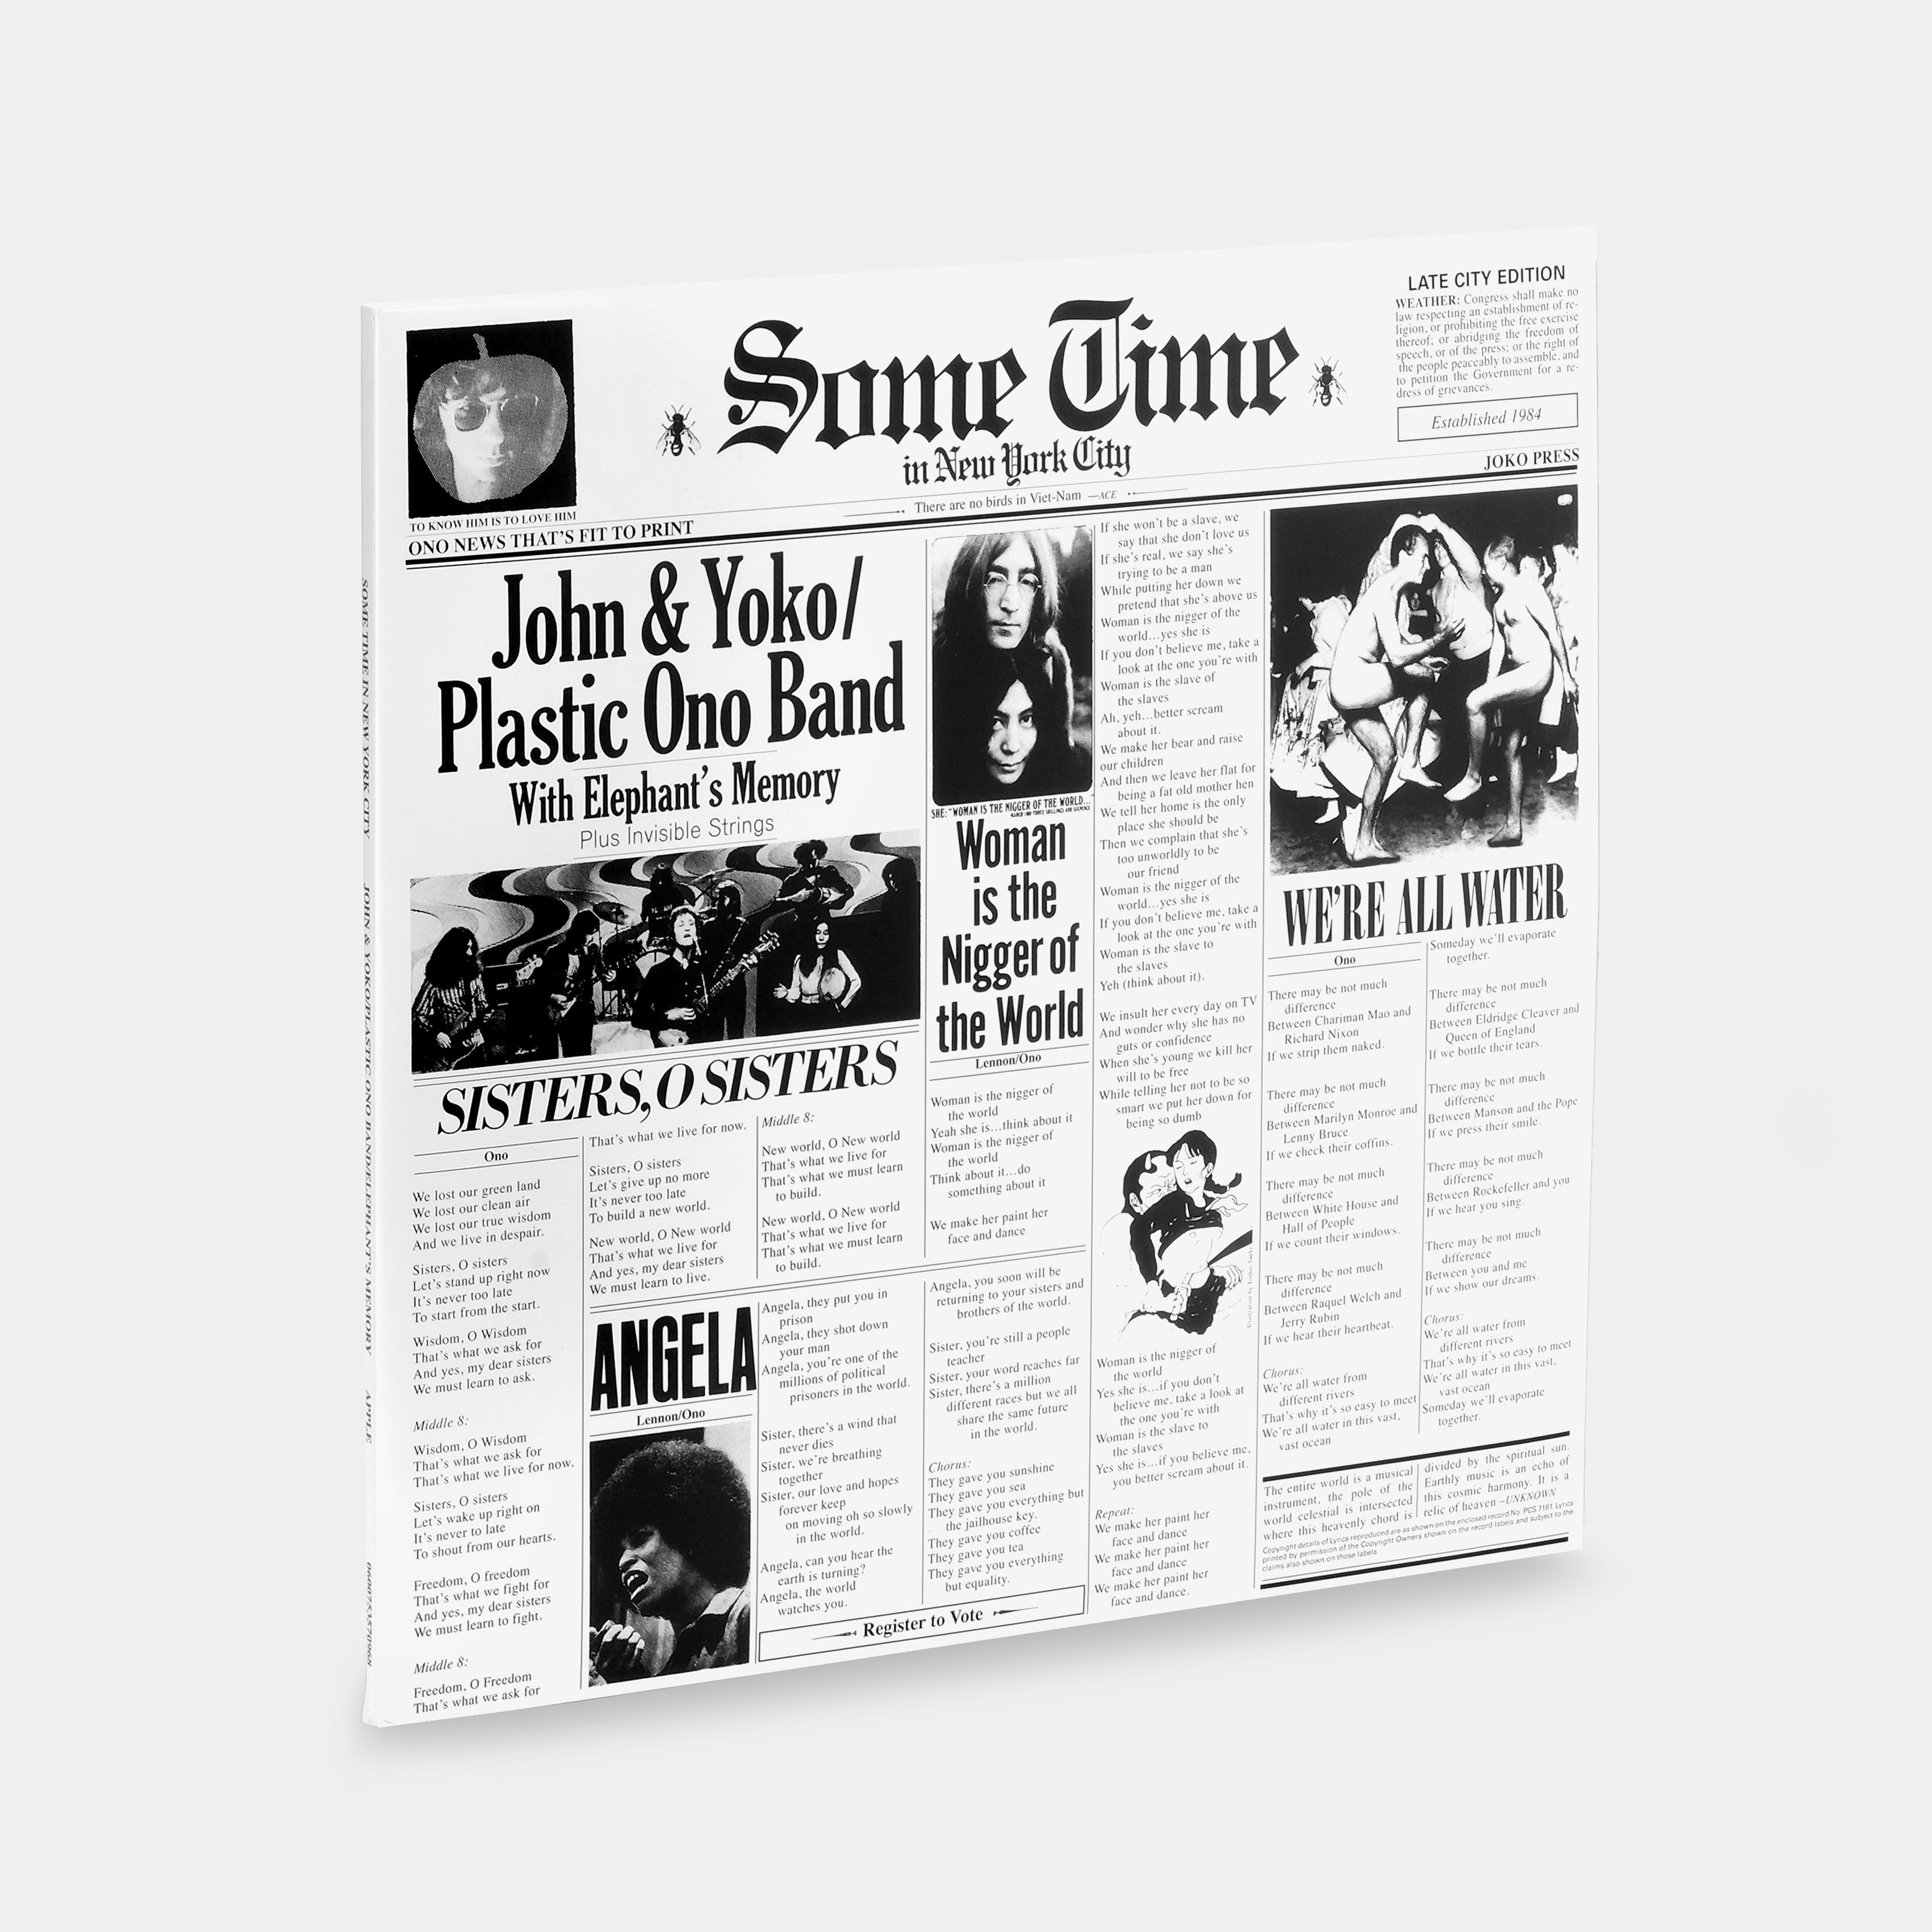 John Lennon & Yoko Ono - Some Time In New York City 2xLP Vinyl Record